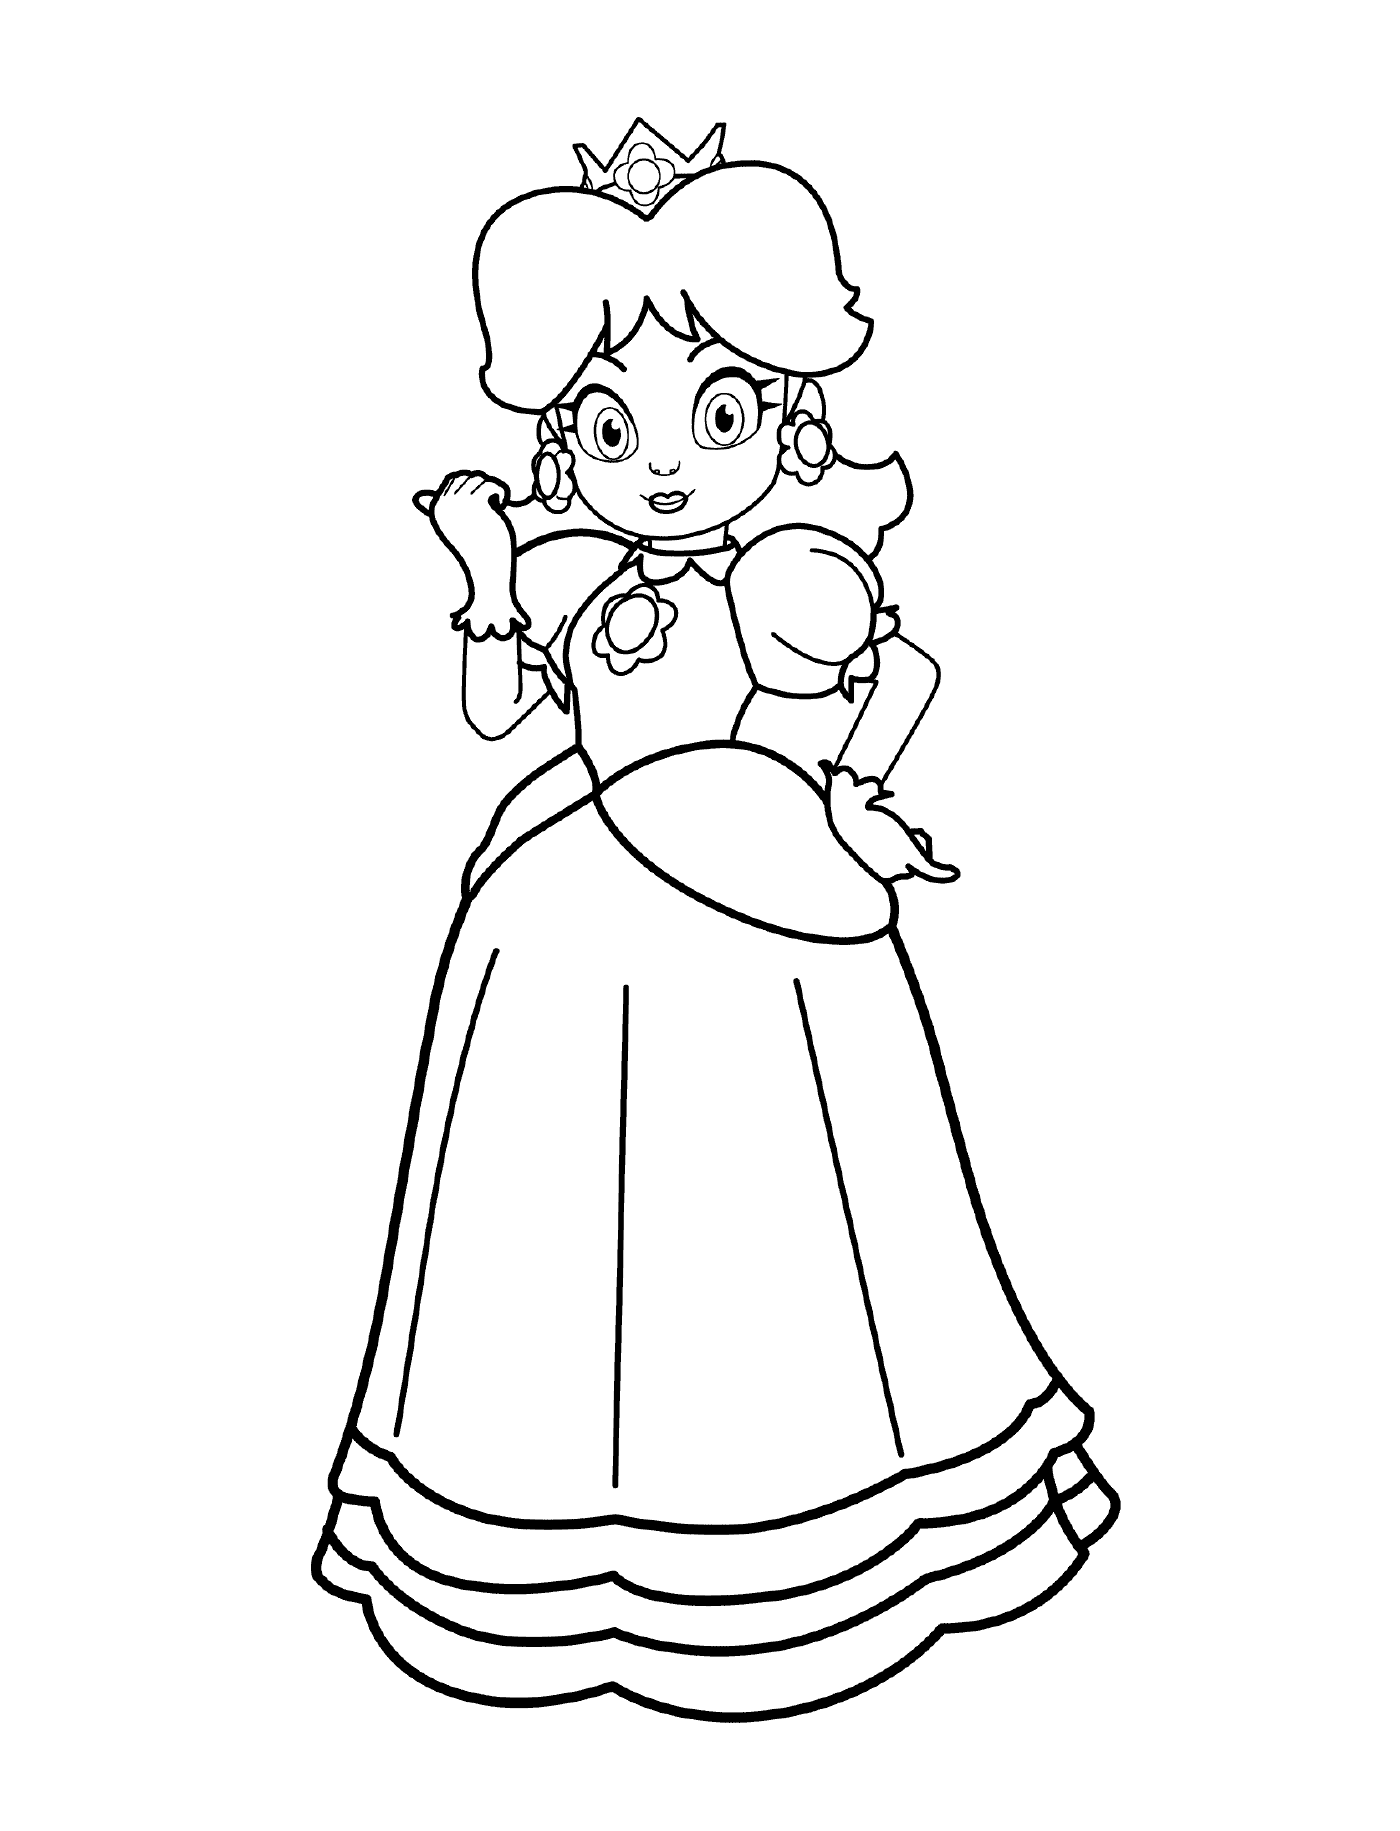  Princess Daisy, a woman in a dress 